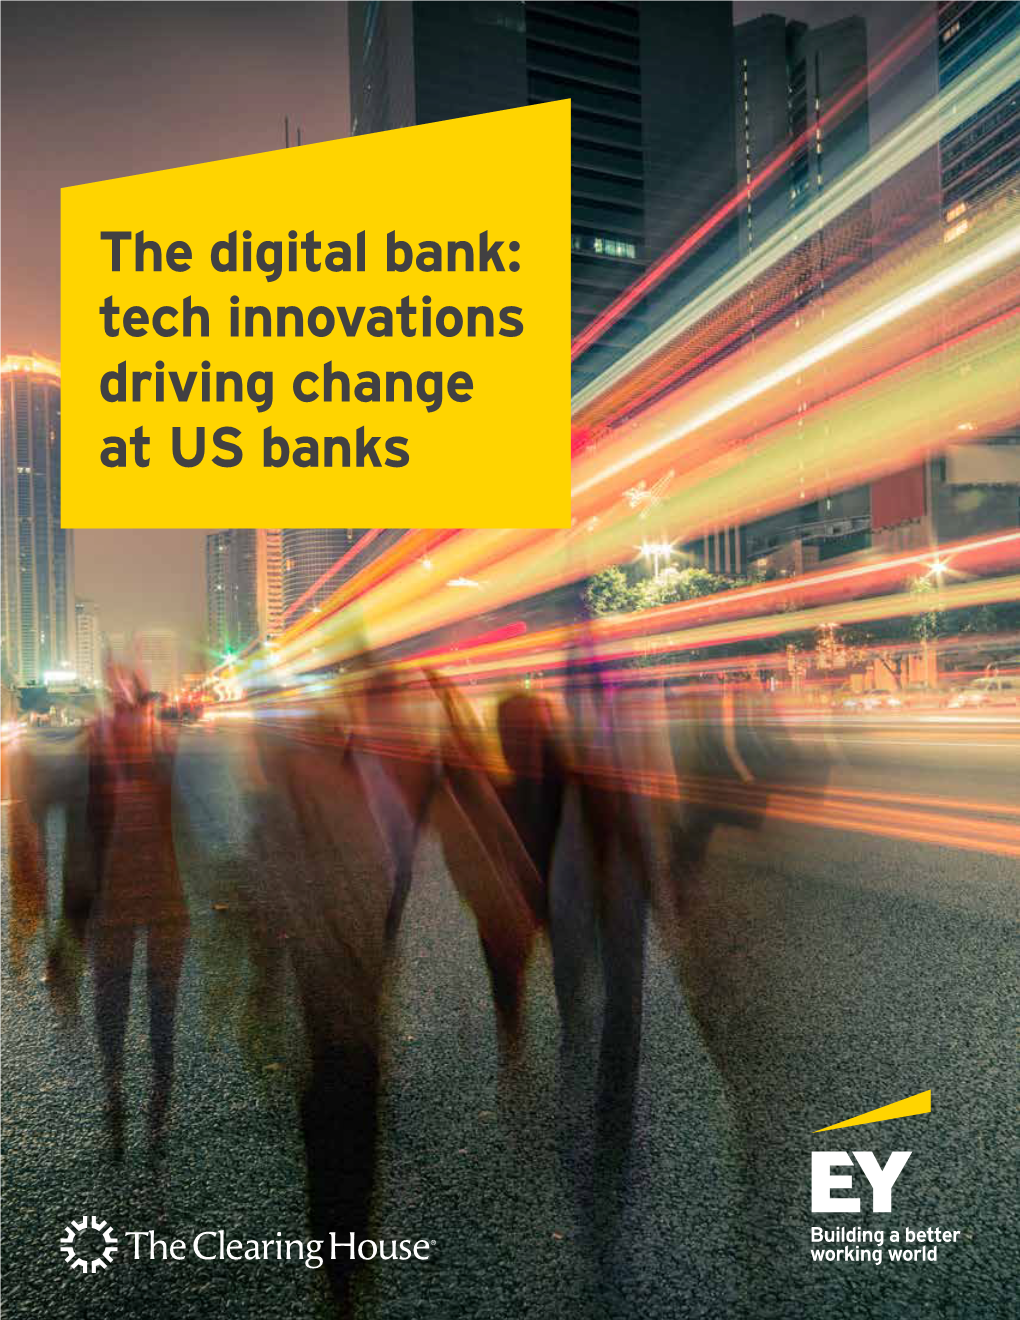 The Digital Bank: Tech Innovations Driving Change at US Banks the Digital Bank: Tech Innovations Driving Change at US Banks